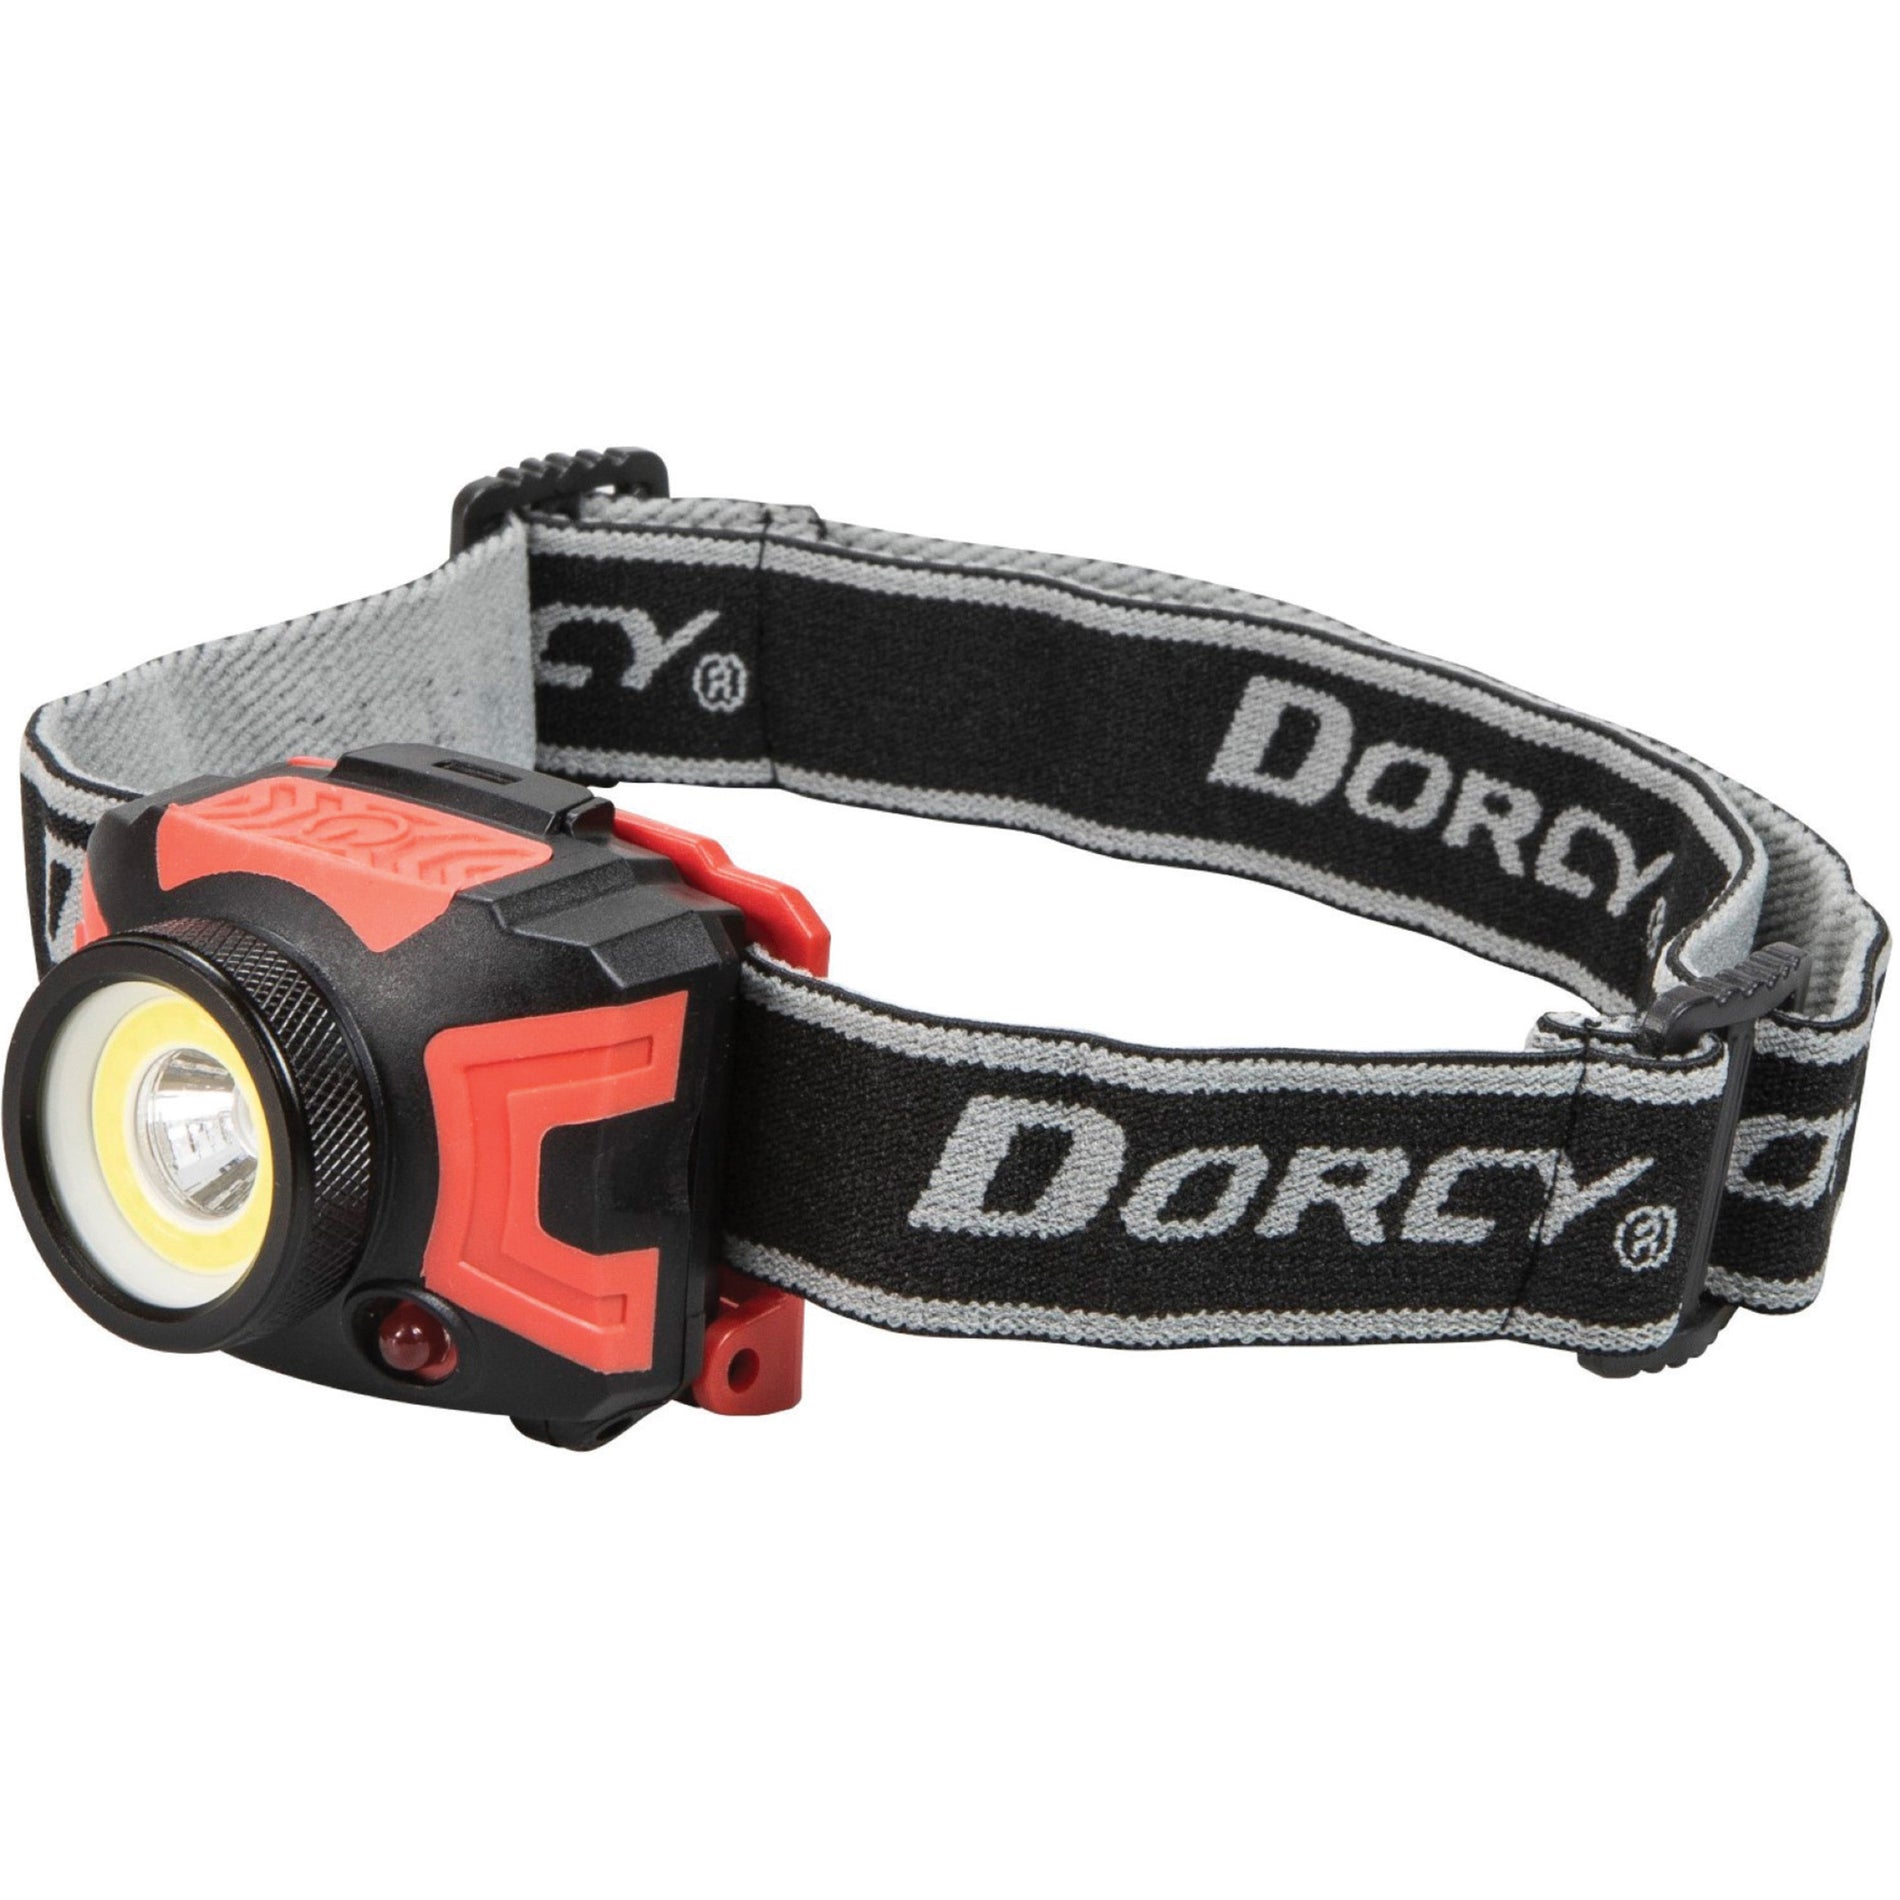 Dorcy 414335 Ultra HD 530 Lumen Headlamp, Water Resistant, AAA Battery Powered